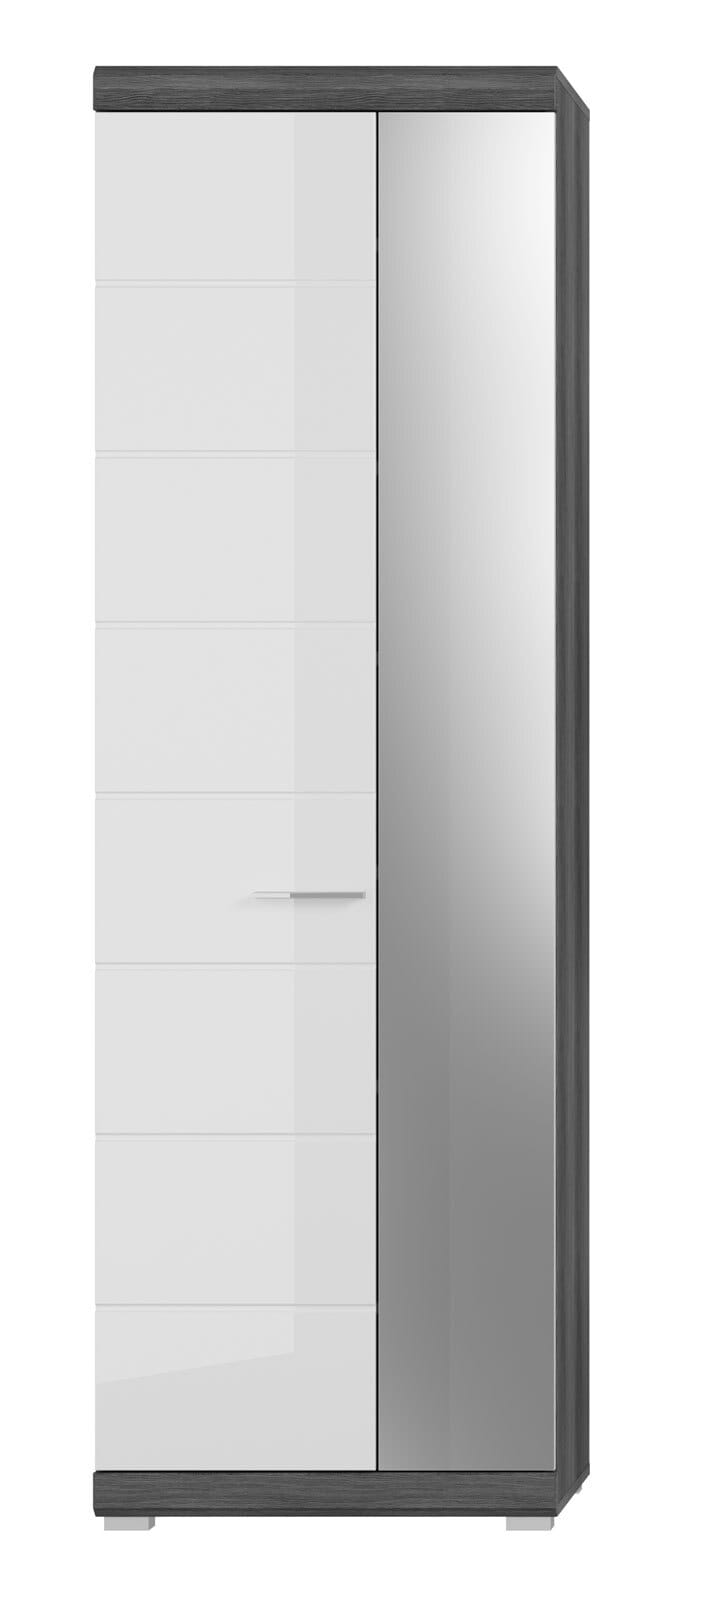 Garderobenschrank SCOUT 62 x 197 cm grau/ weiß